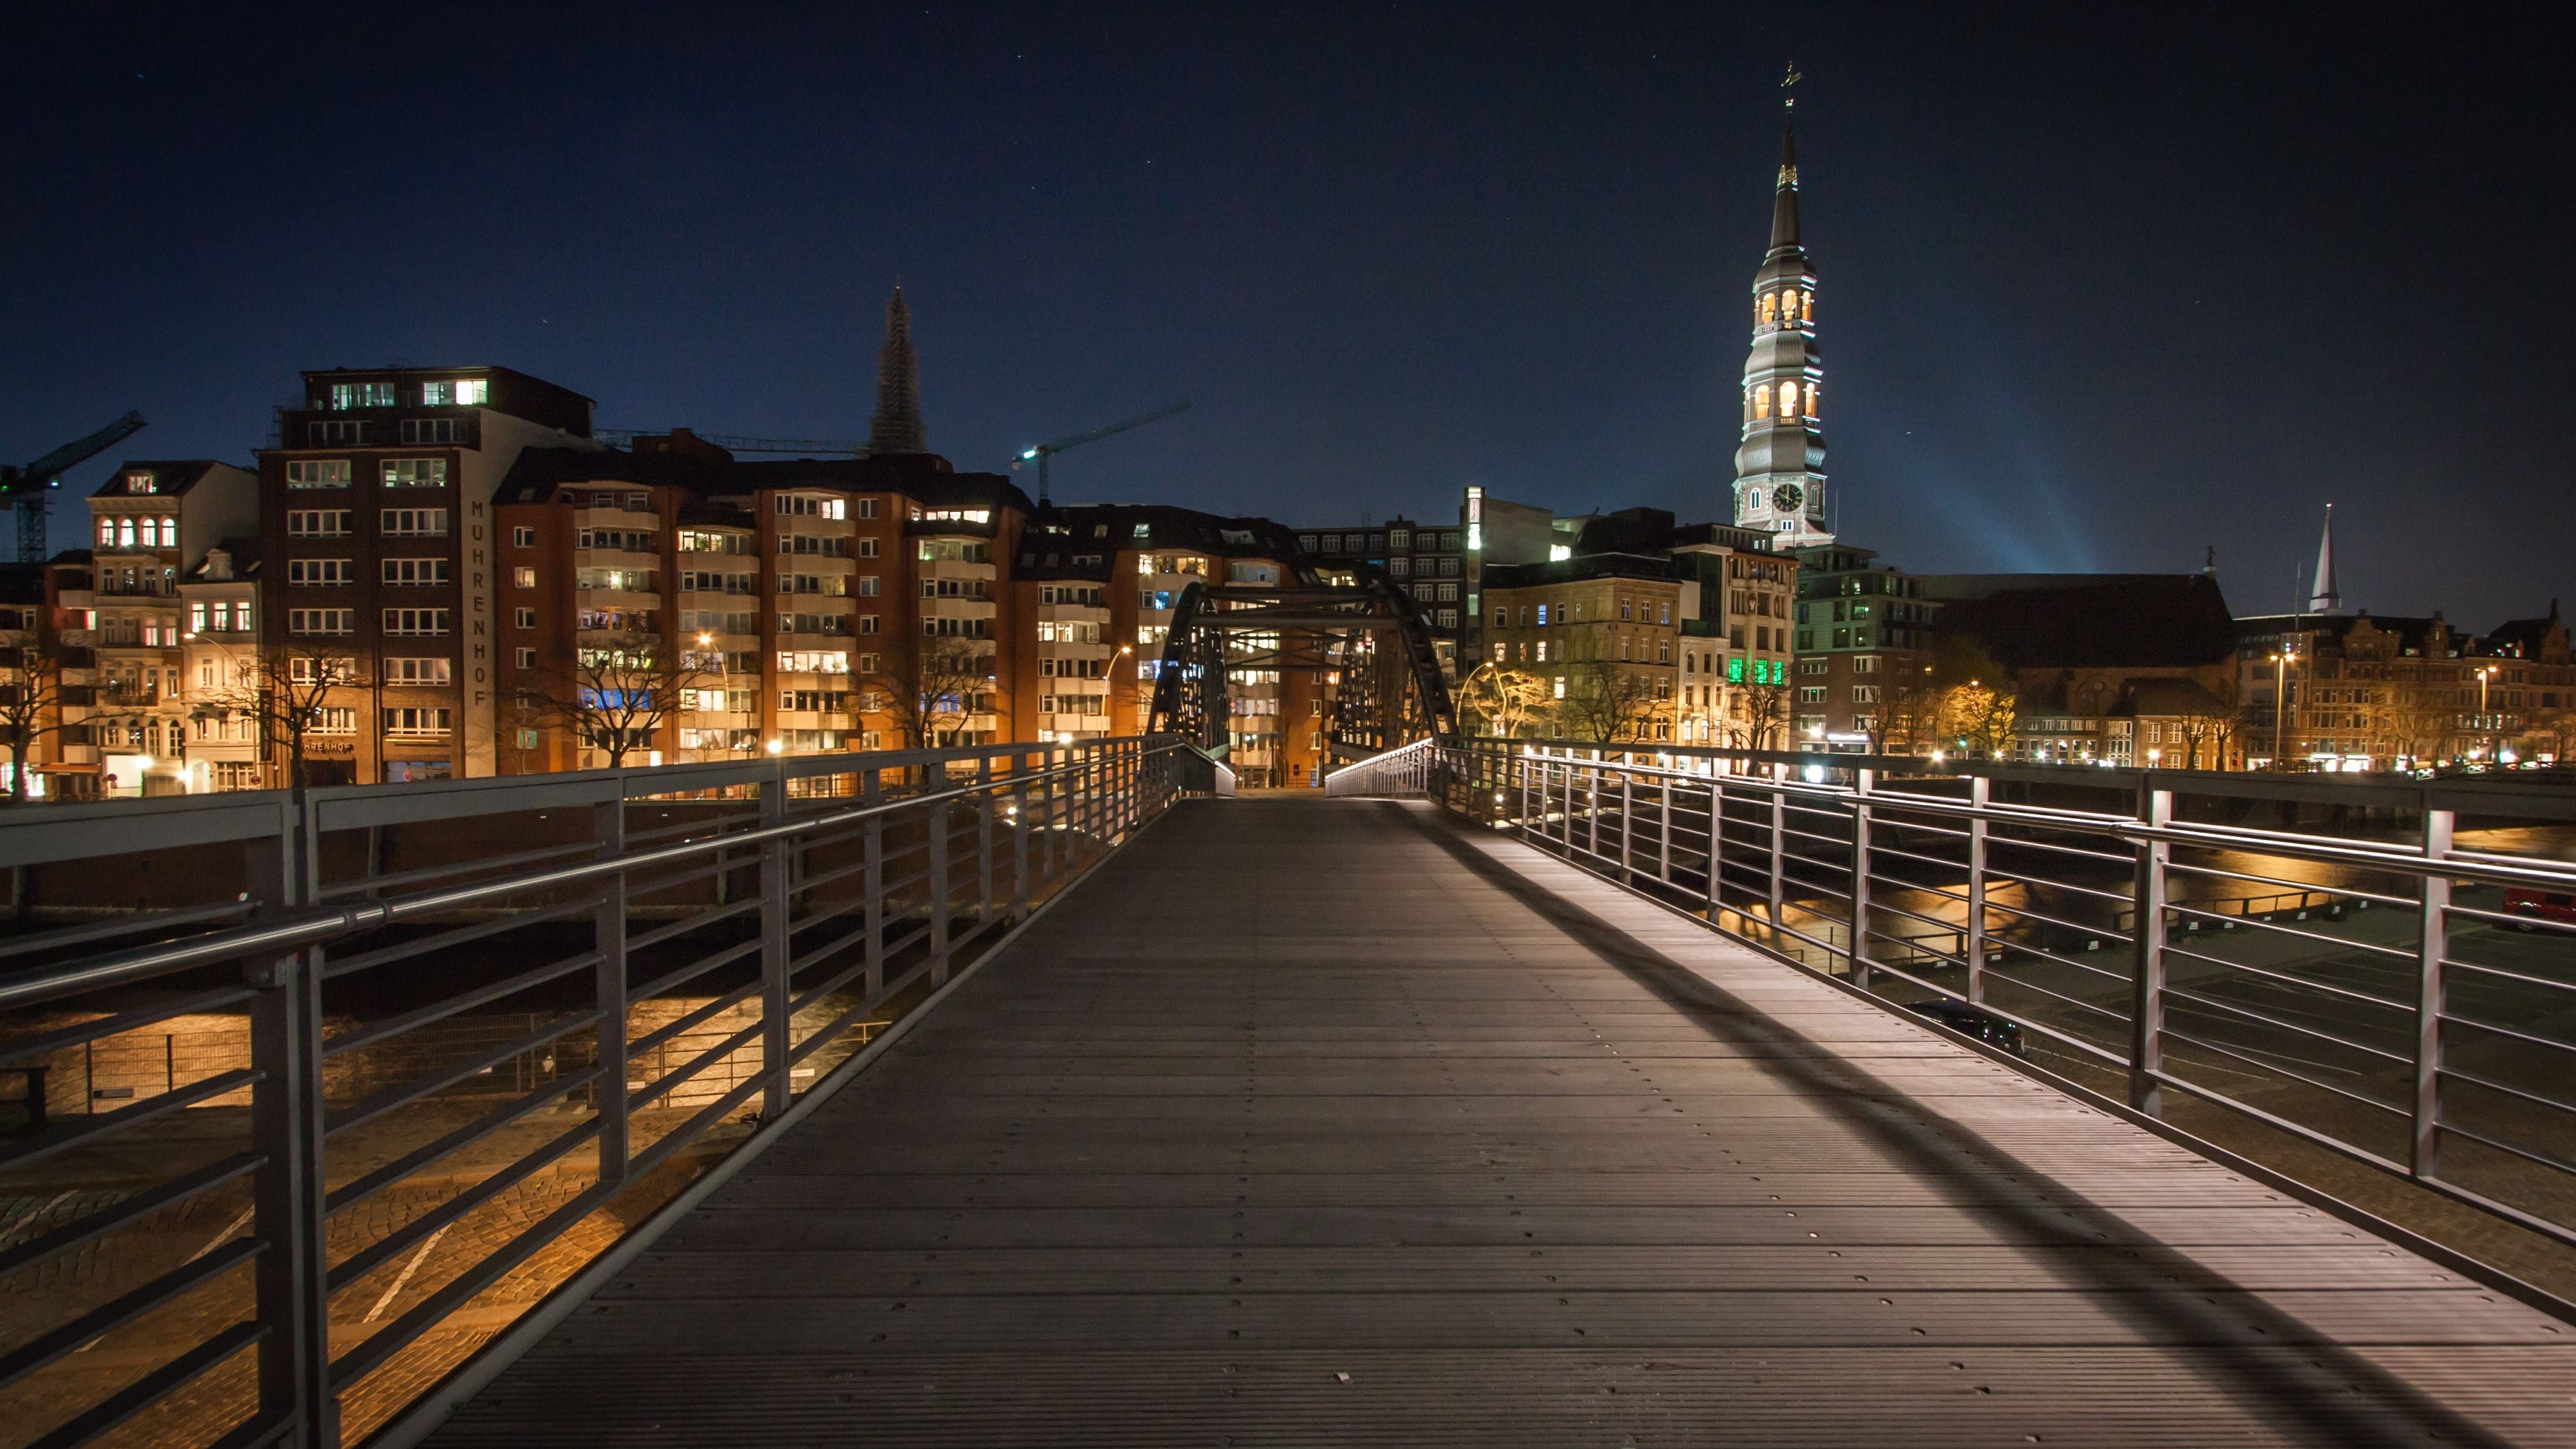  The bridge to HafenCity, a development on Hamburg's Elbe waterfront. (John Kraus/Flickr) 